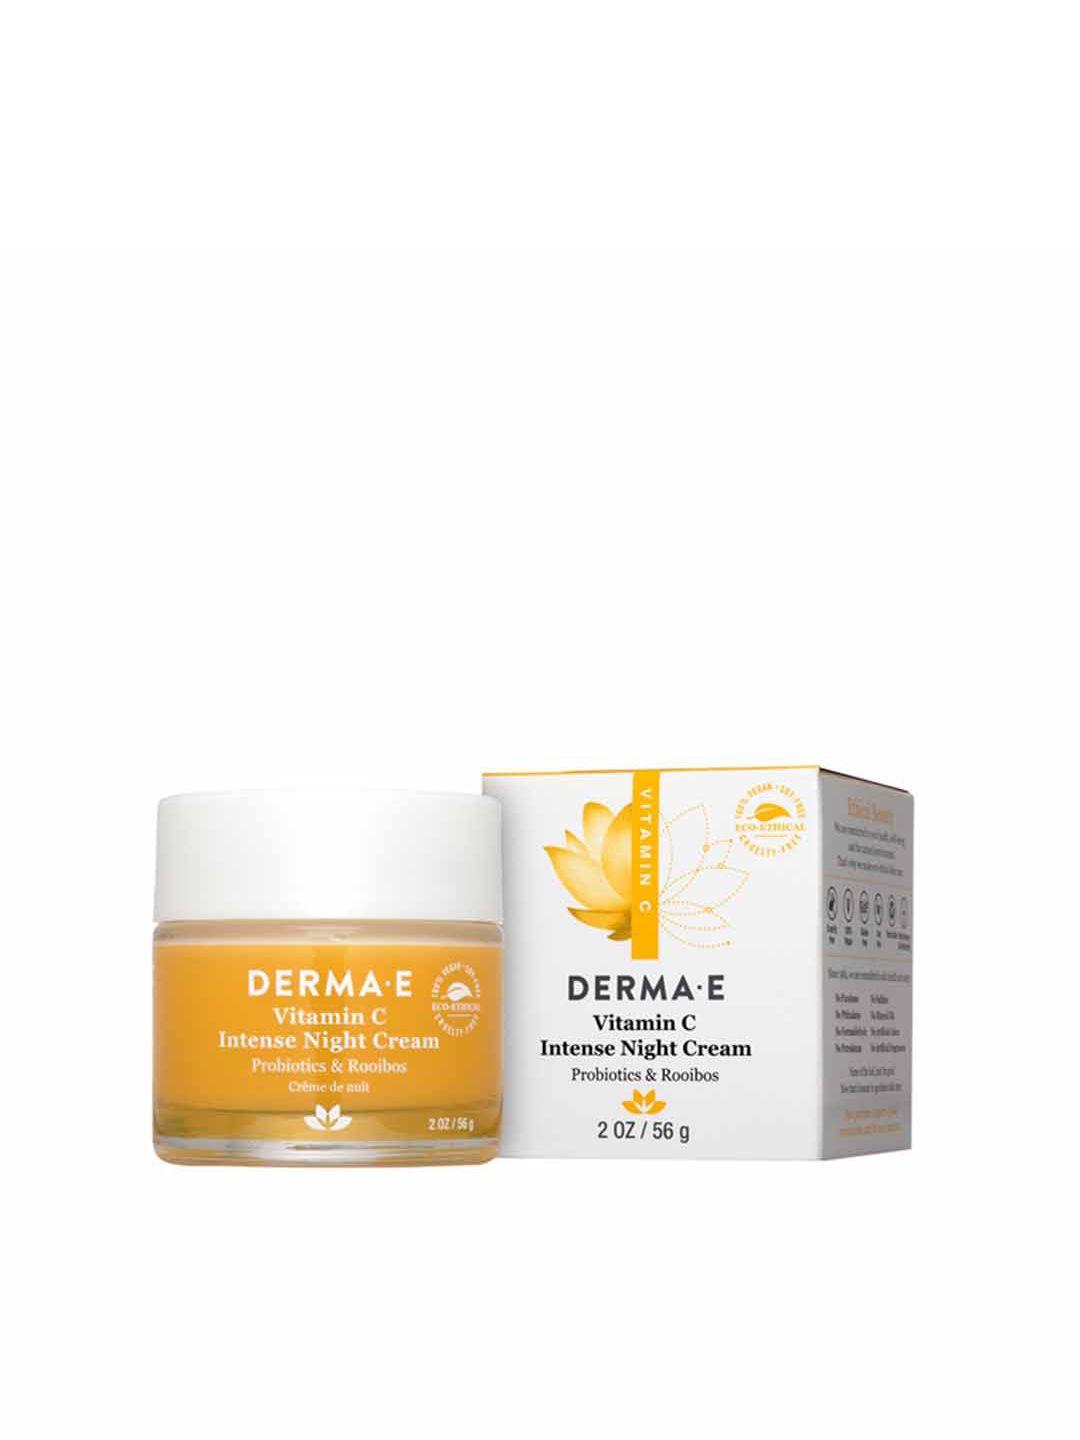 derma e vitamin c intense night cream with probiotics & rooibos - 56 g